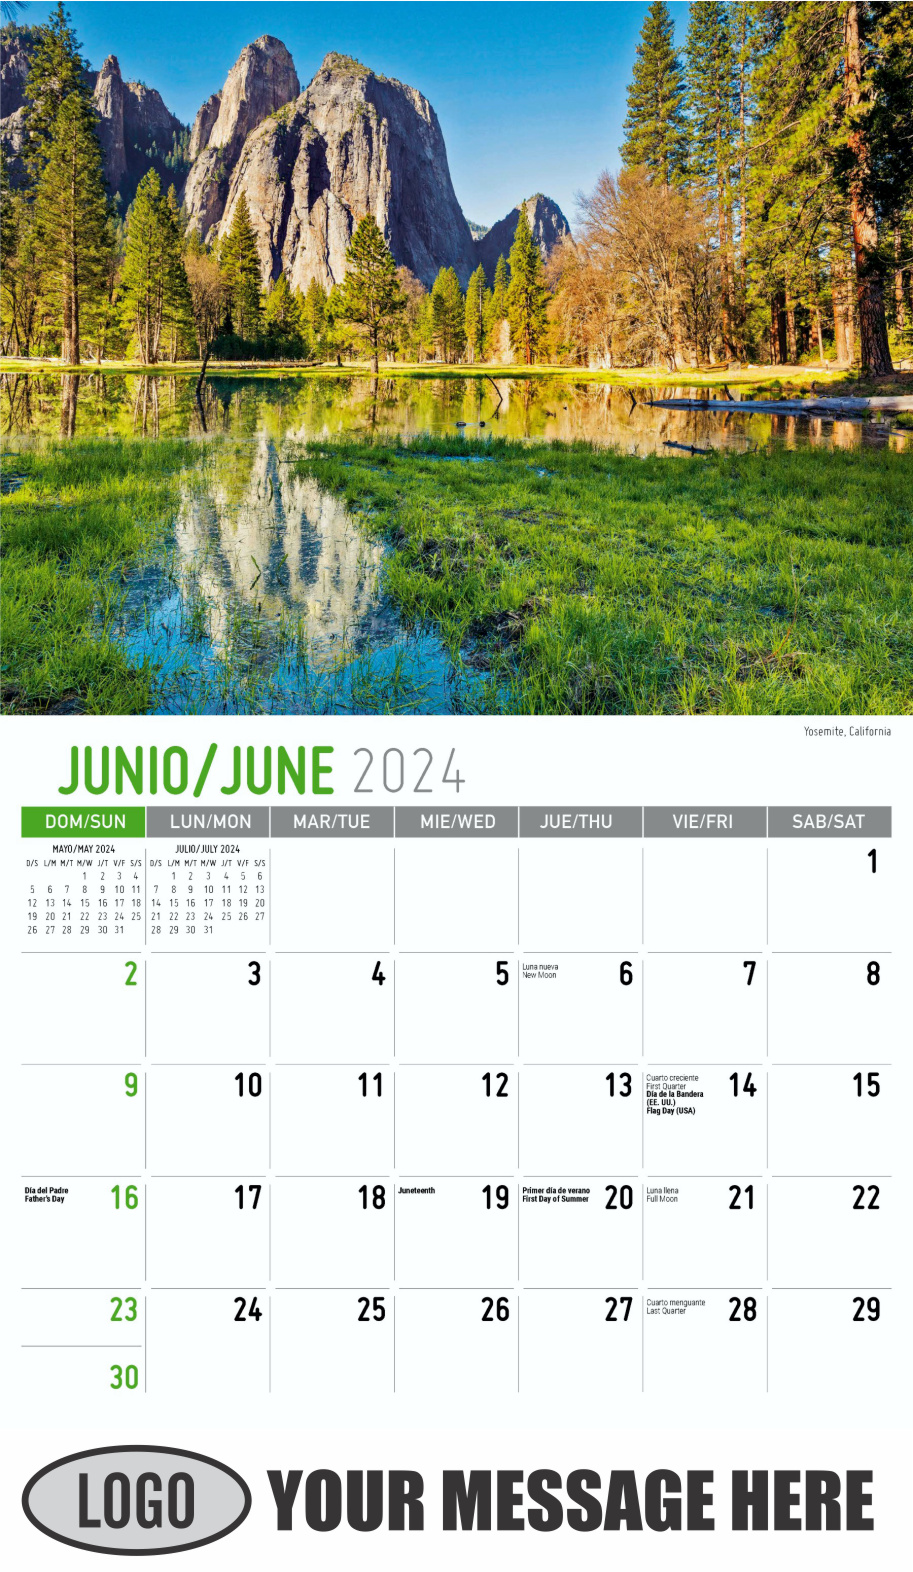 Scenes of America 2024 Bilingual Business Promo Calendar - June